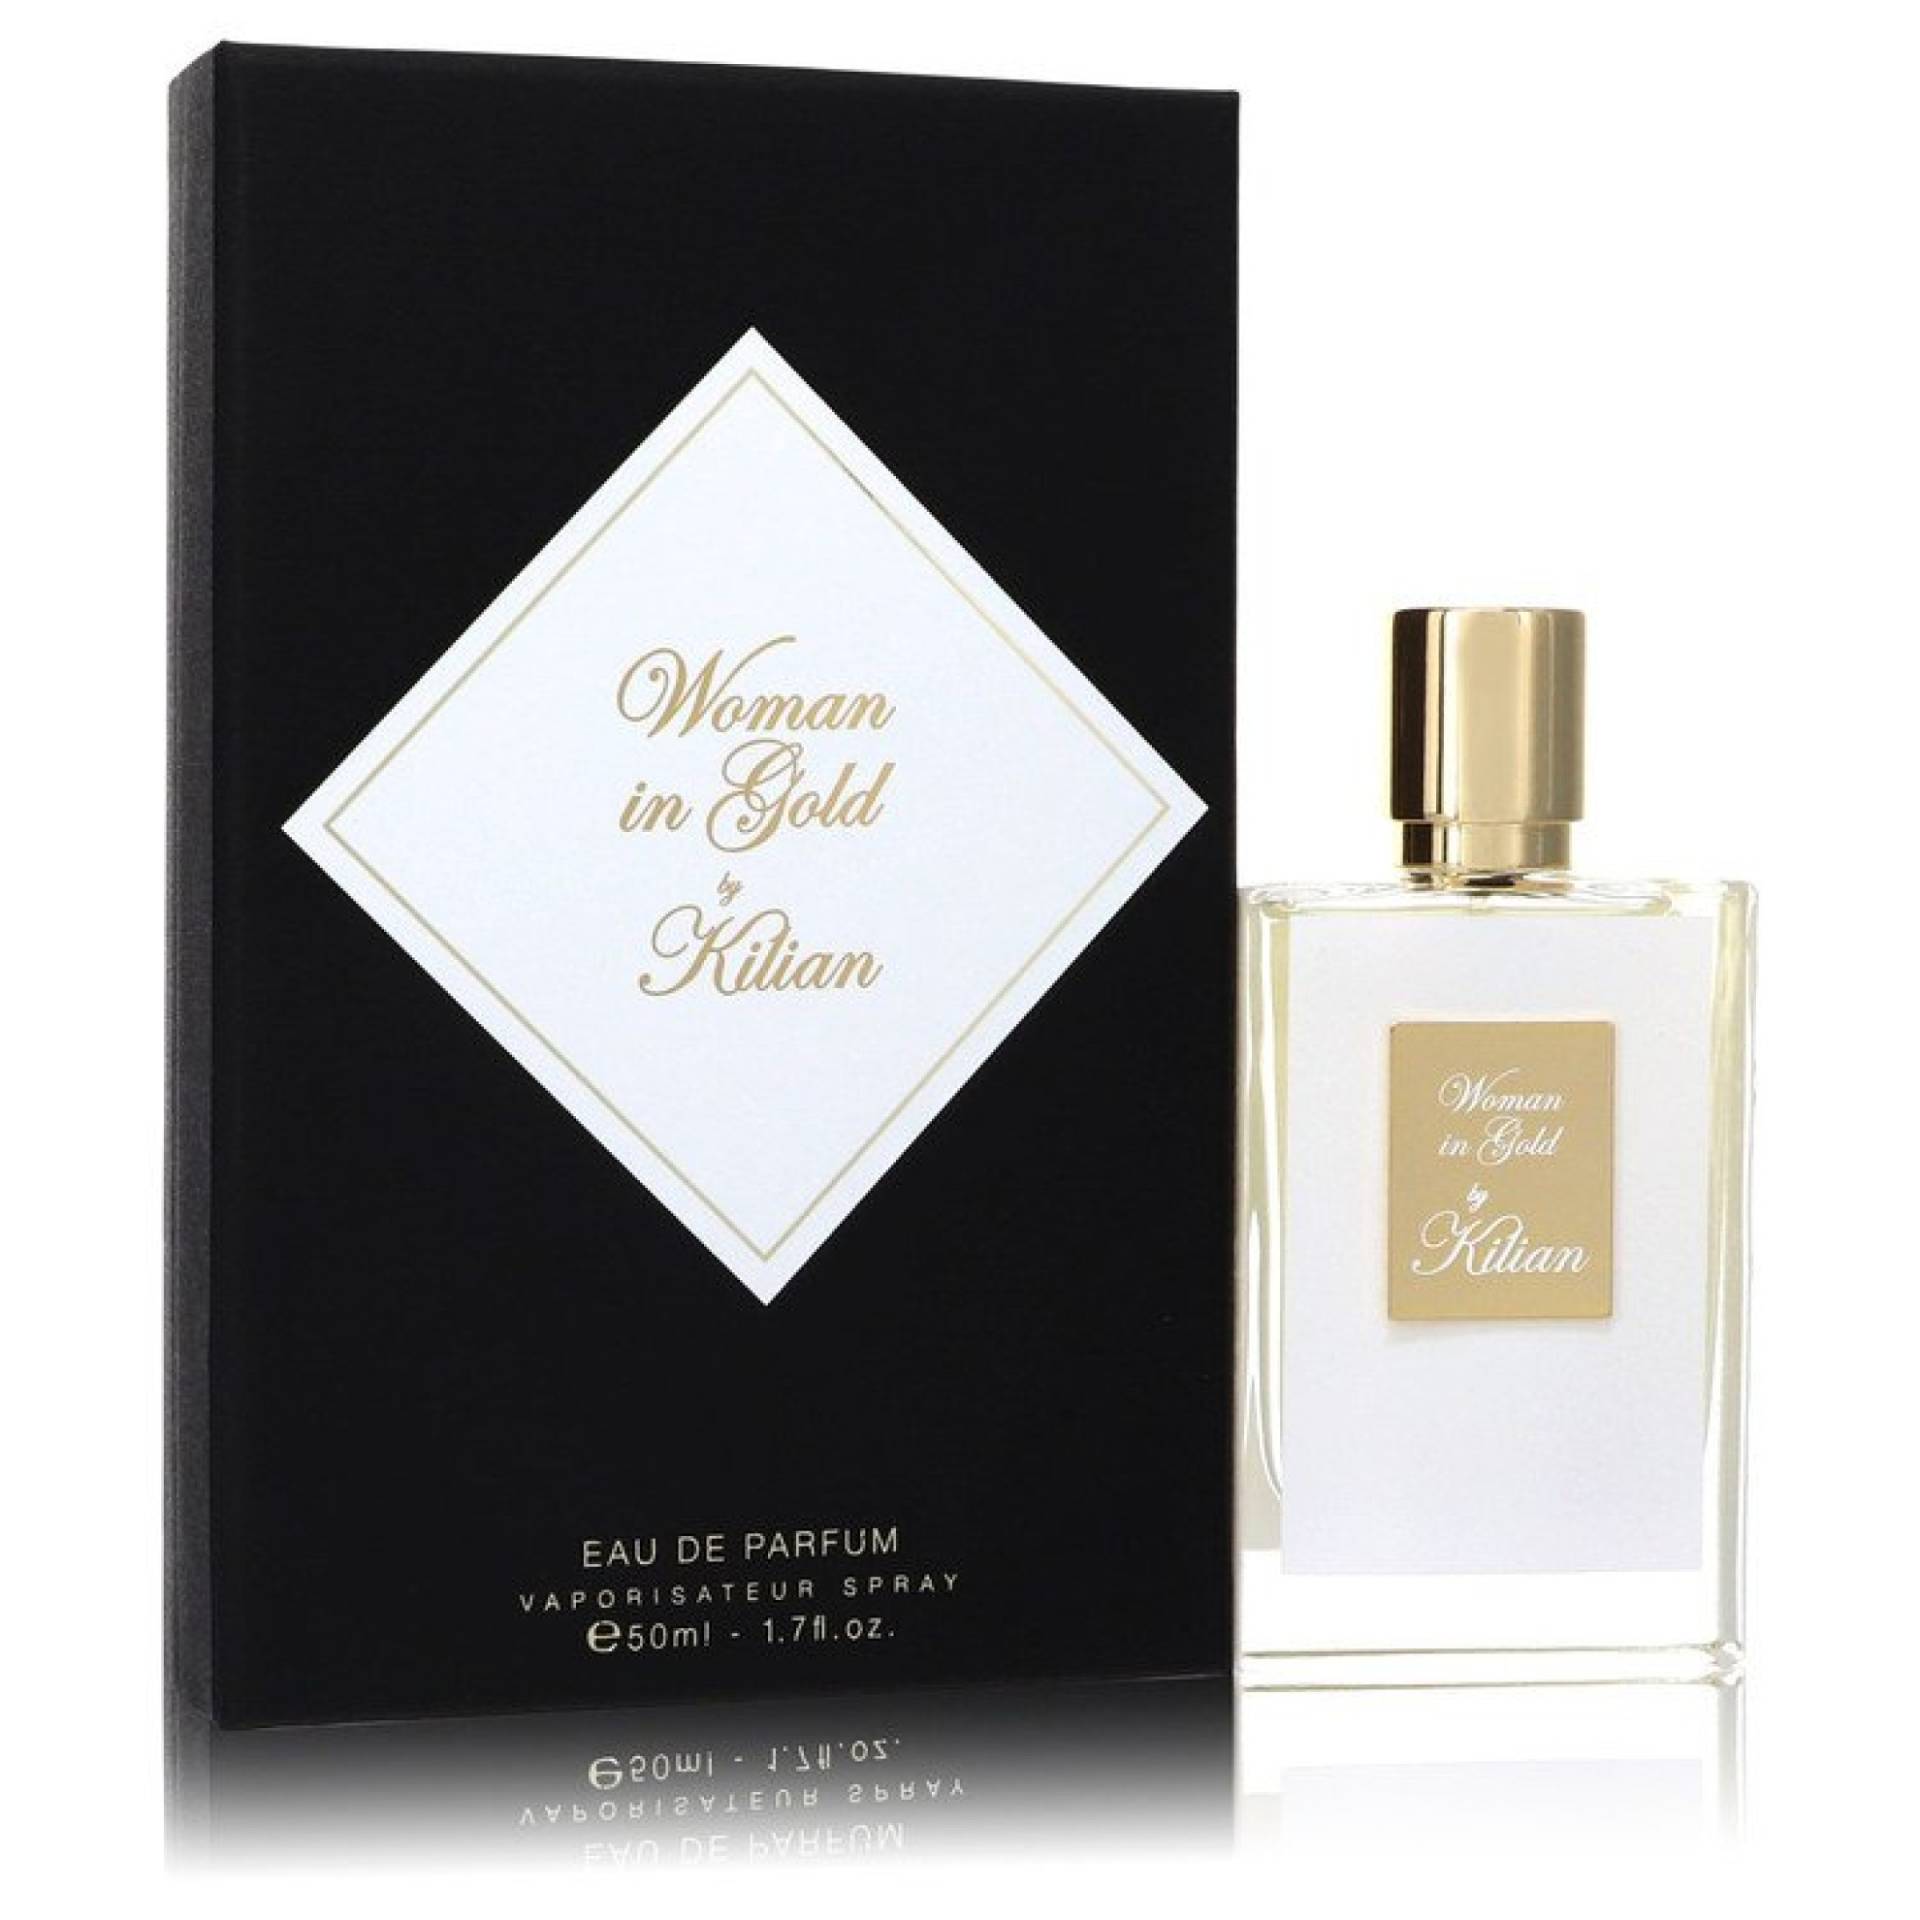 Kilian Woman in Gold Eau De Parfum Spray 50 ml von Kilian